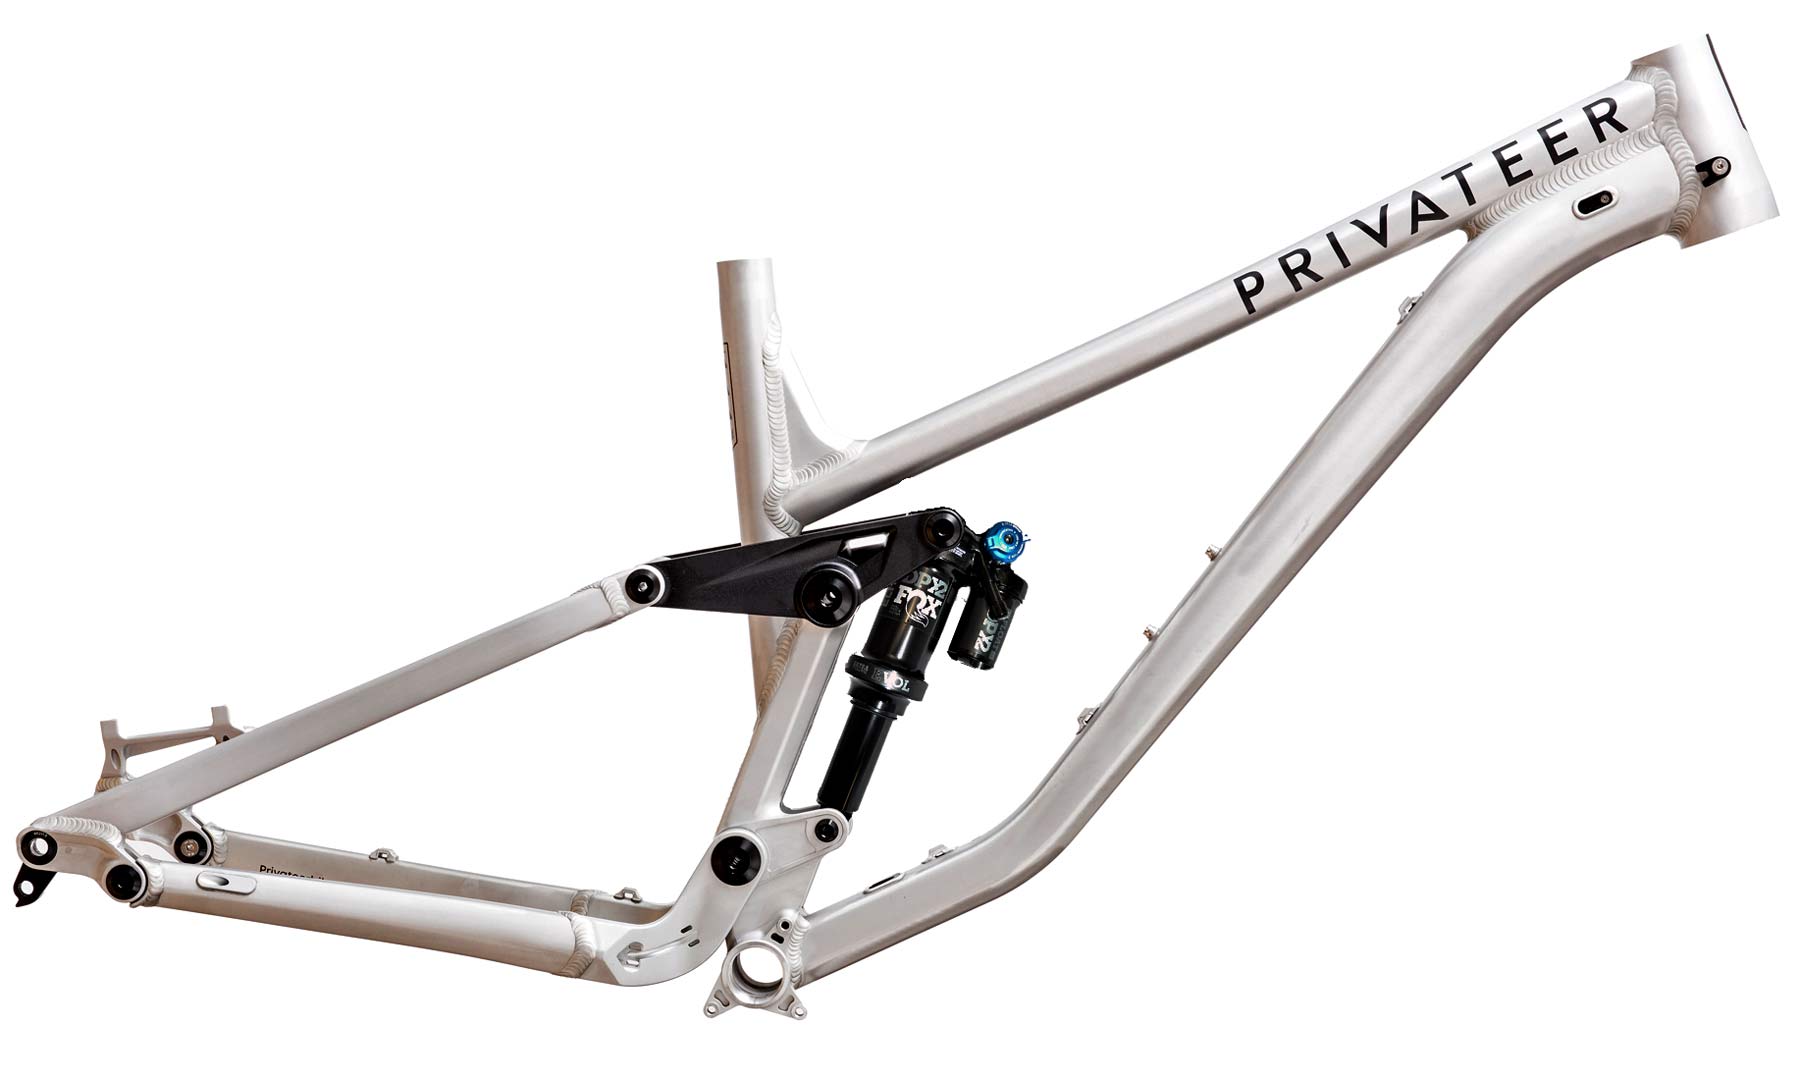 Privateer 141 all-mountain trail bike, affordable alloy 29er trail enduro all-mountain bike, raw aluminium frameset